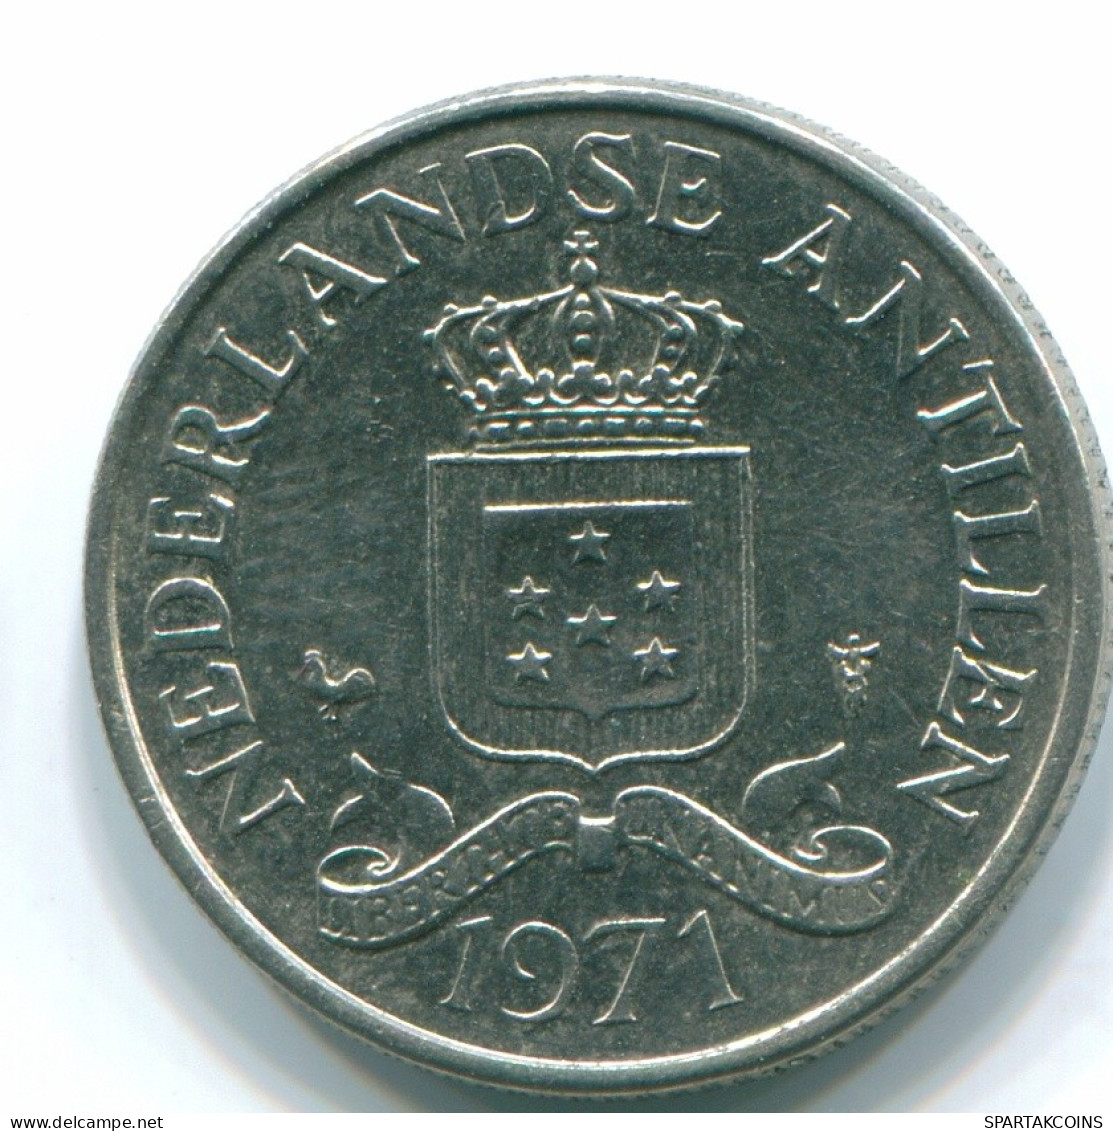 25 CENTS 1971 NIEDERLÄNDISCHE ANTILLEN Nickel Koloniale Münze #S11512.D.A - Netherlands Antilles